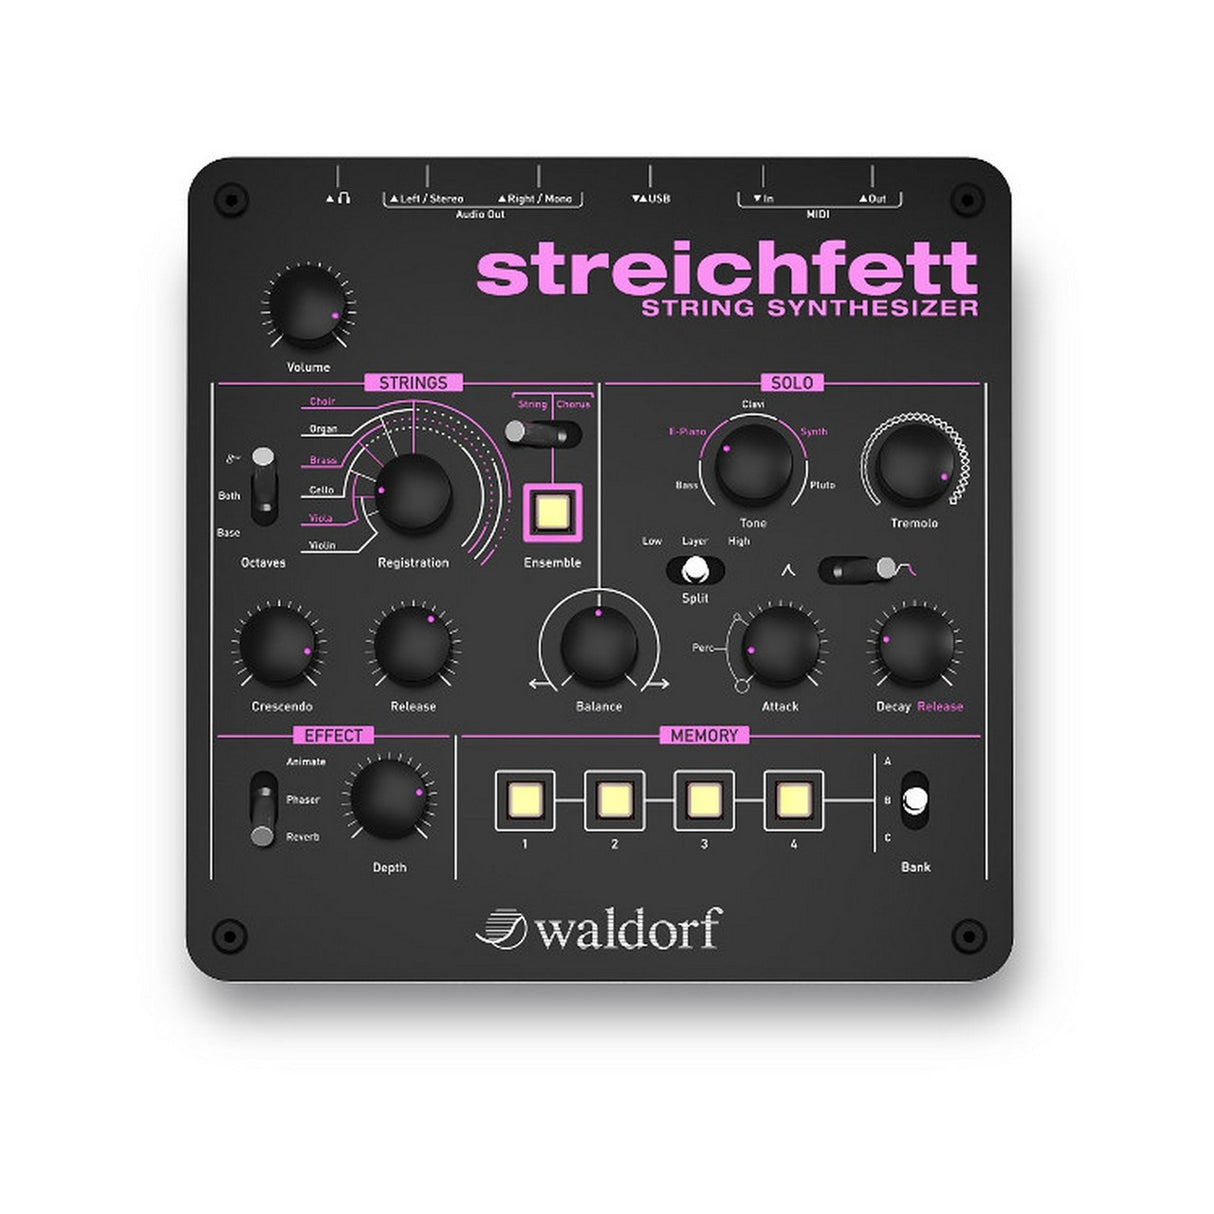 Waldorf Streichfett | 128 Voice Fully Polyphonic String Synthesizer